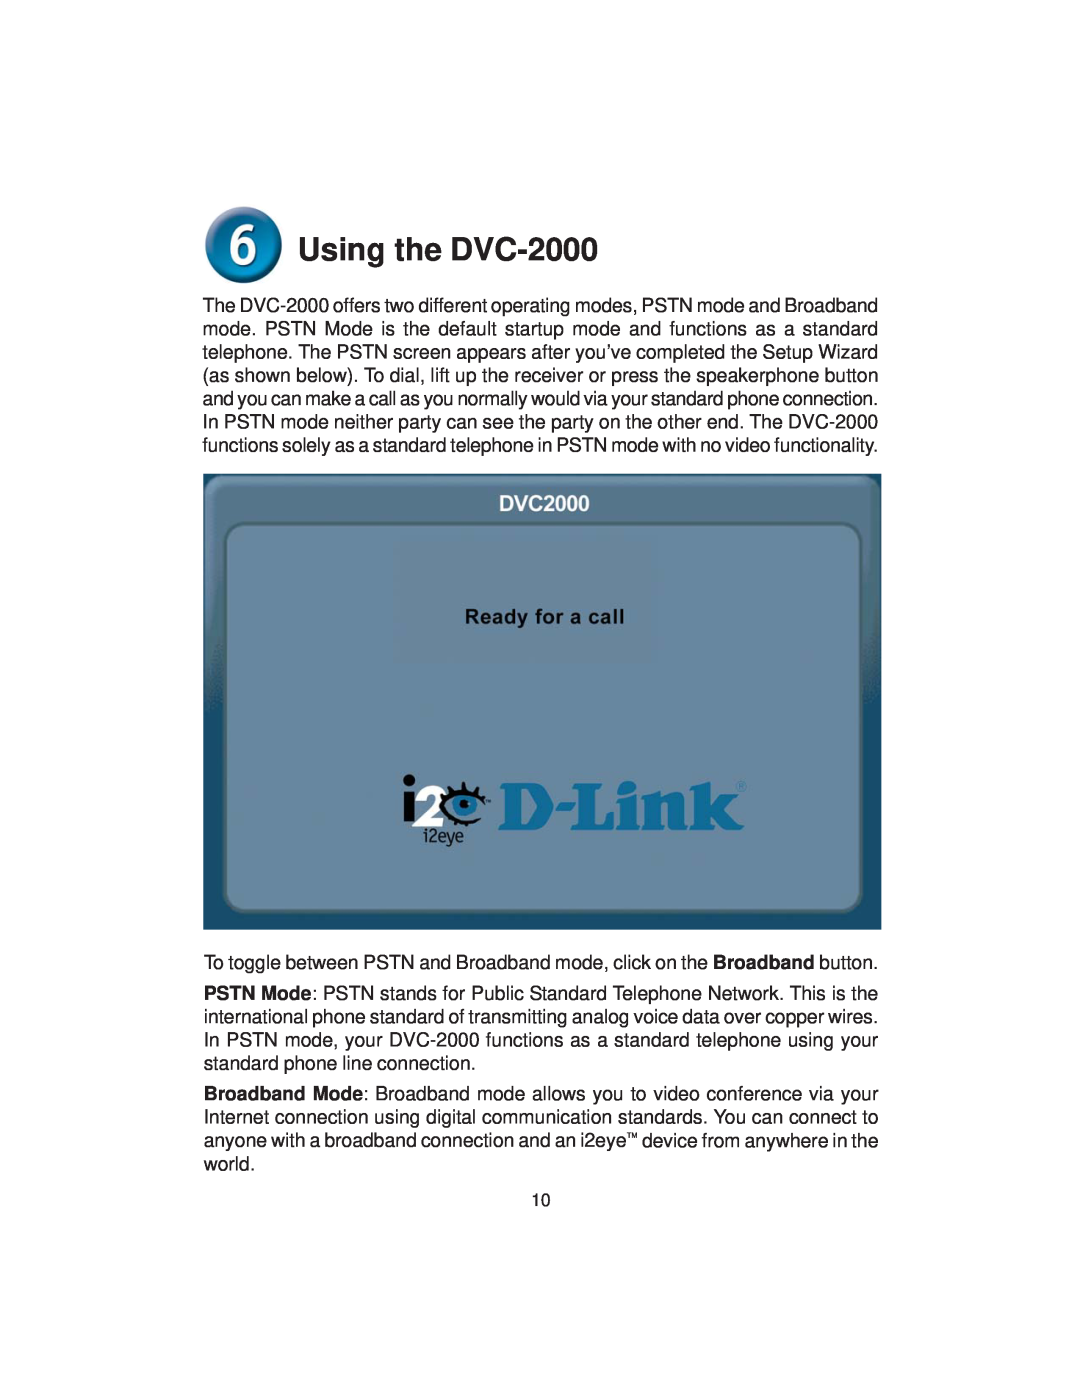 D-Link warranty Using the DVC-2000 